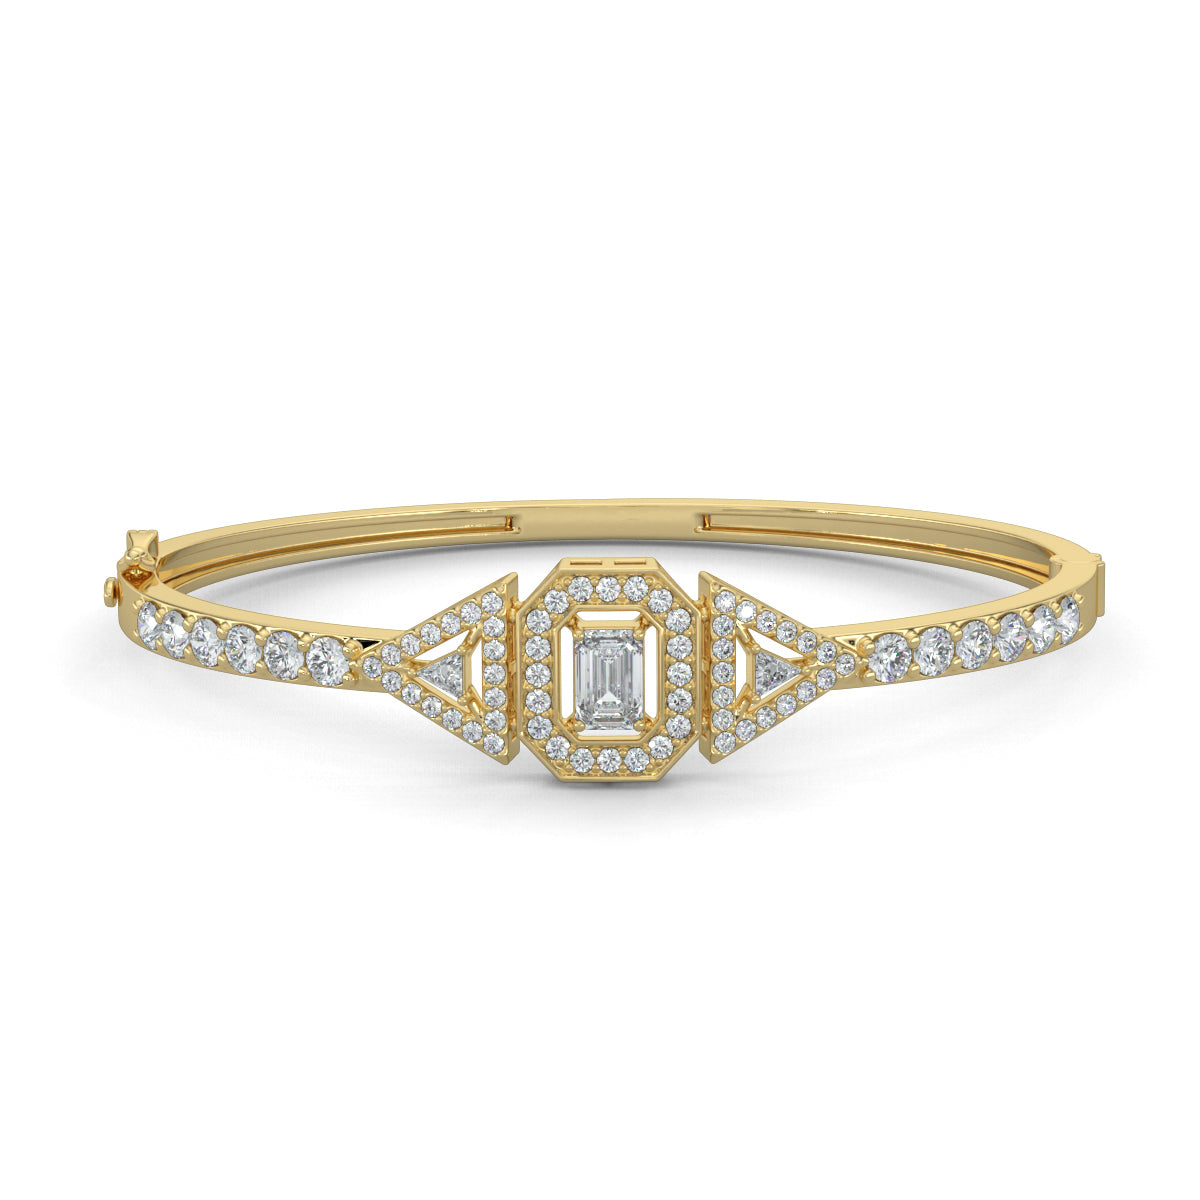 Yellow Gold, Diamond Bracelet, Natural diamond bracelet, Lab-grown diamond bracelet, Evergreen Trinity Bracelet, Emerald-shaped diamond, Trillion-cut diamonds, Pave setting, Ethical diamond jewelry, Luxury bracelet, Sustainable diamond bracelet